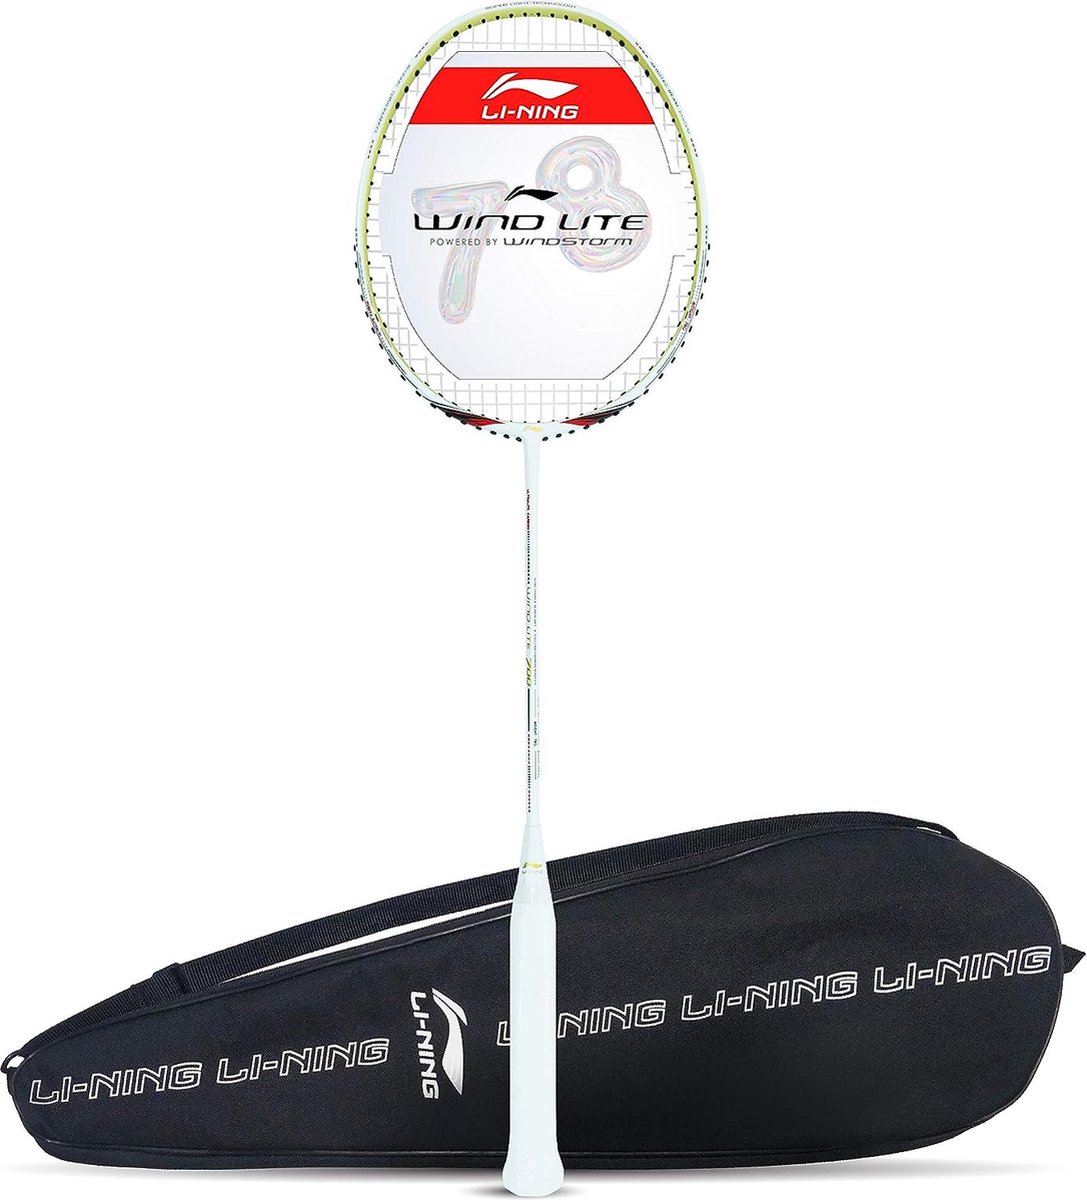 Li-Ning Wind Lite 700 Carbon Fiber Strung Badminton Racket met volledige dekking (wit/rood)